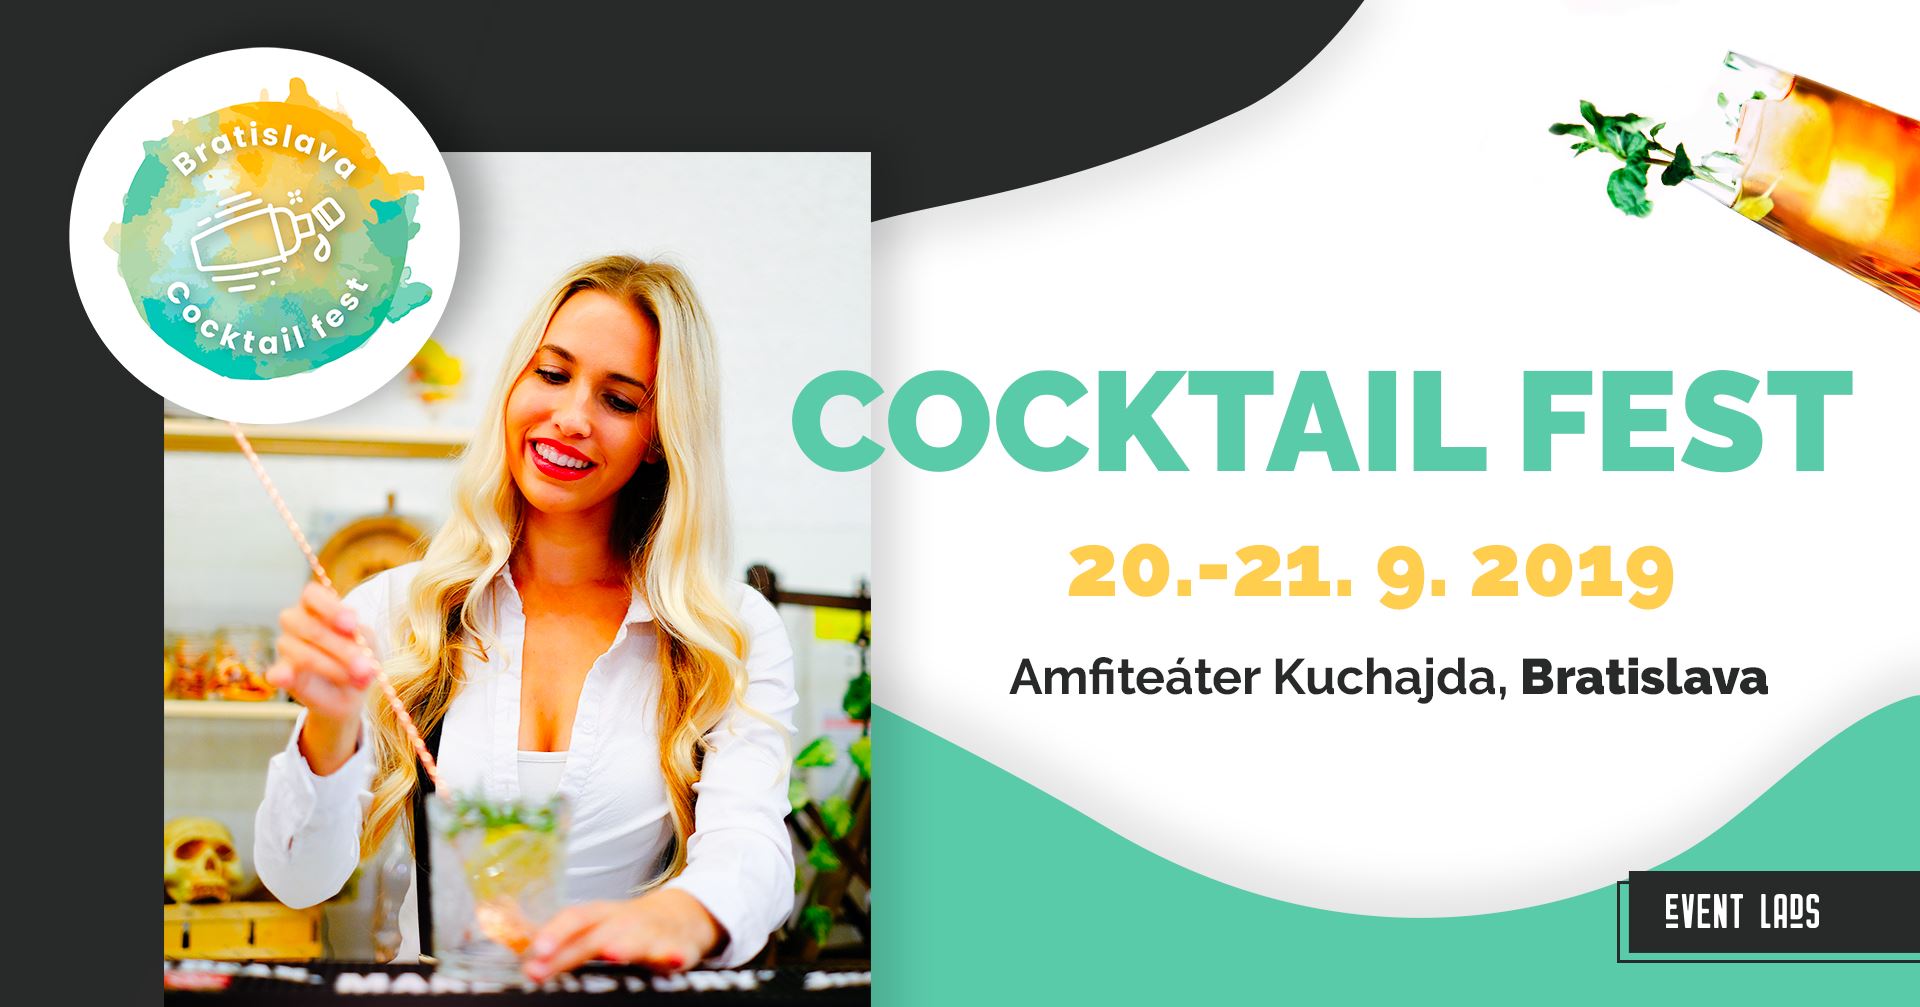 Cocktail fest Bratislava 2019 - Kuchajda